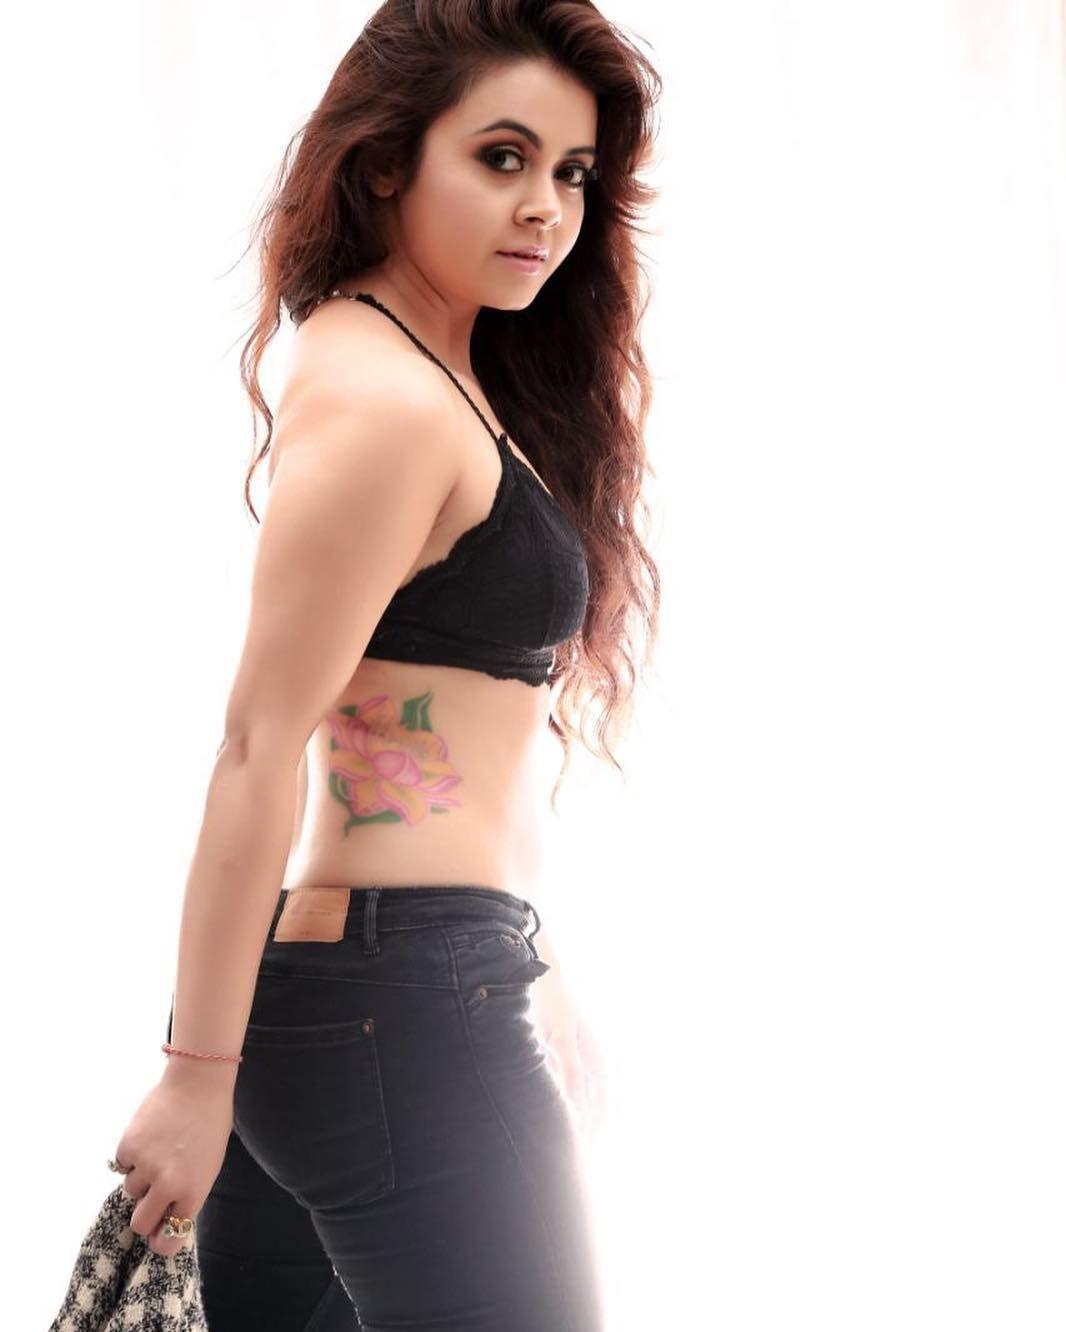 Devoleena Bhattacharjee aka Gopi Bahu Images Bold & Hot Pics Wallpapers